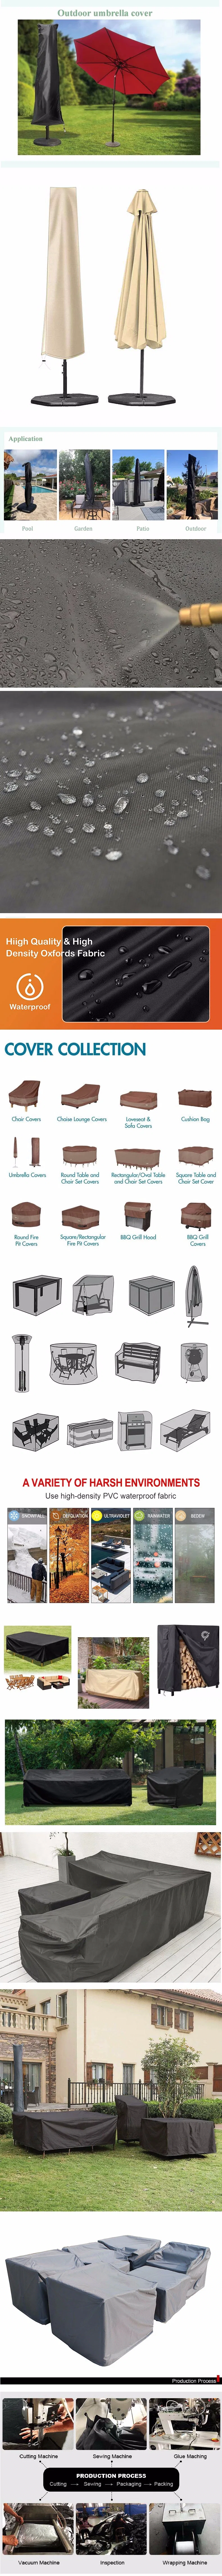 Chair Patio Garden Section Sofa Custom Outdoor Furniture Umbrella Cover Waterproof